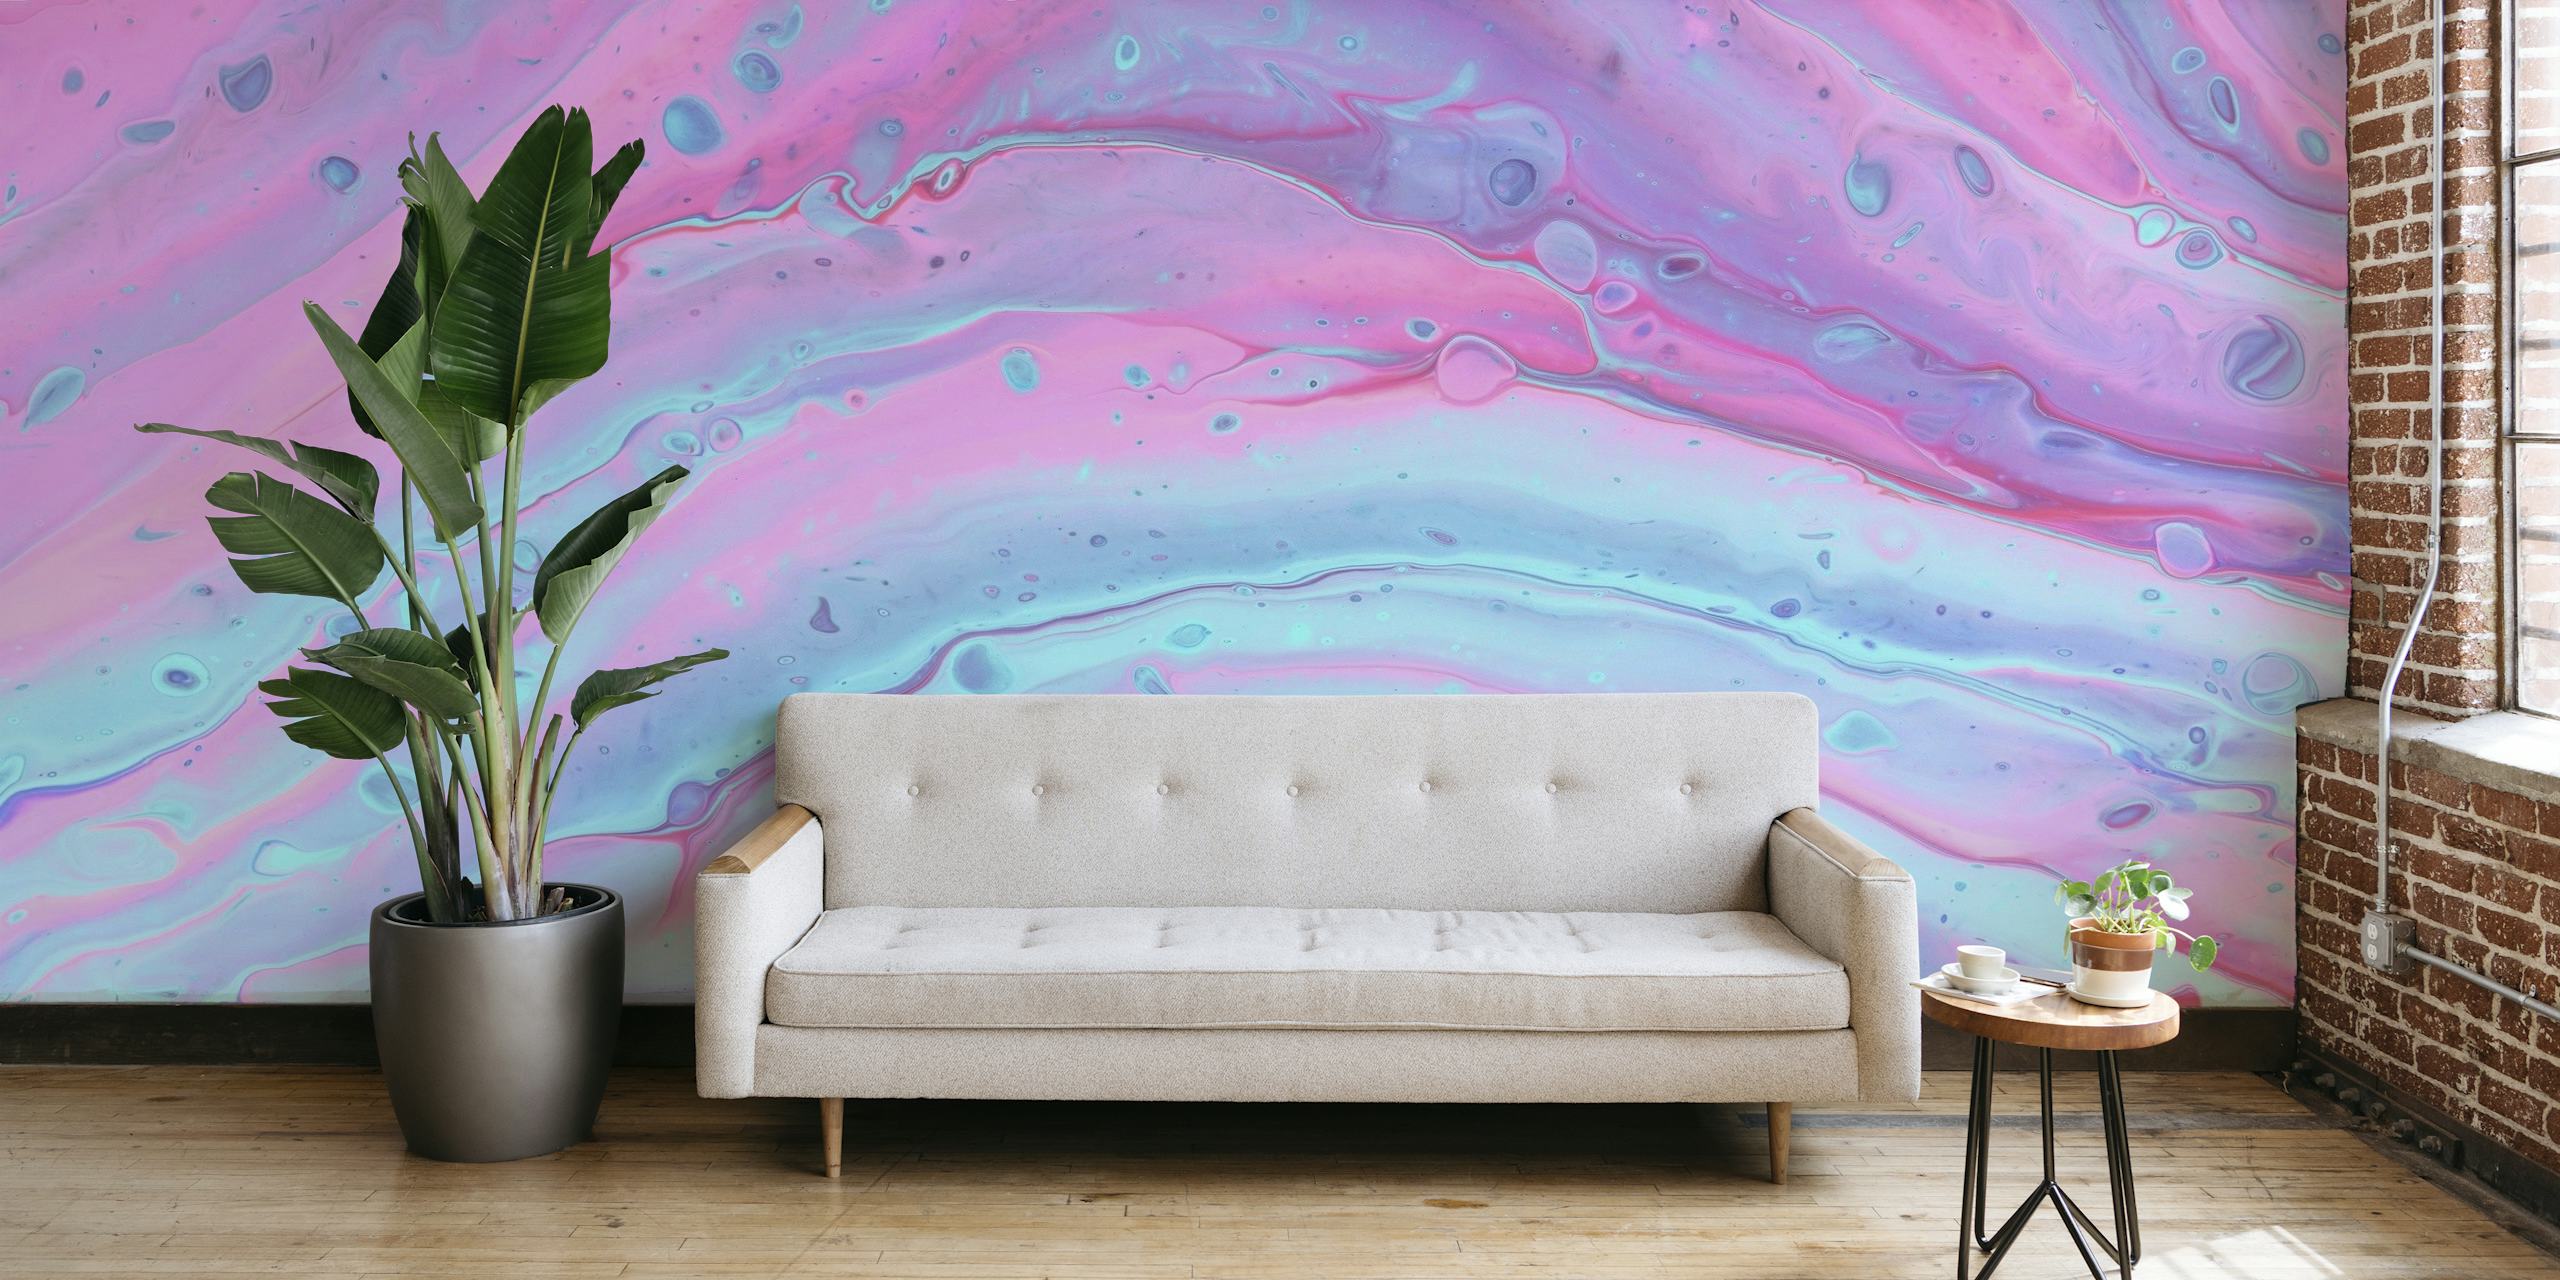 Vibrant liquid marble papel pintado